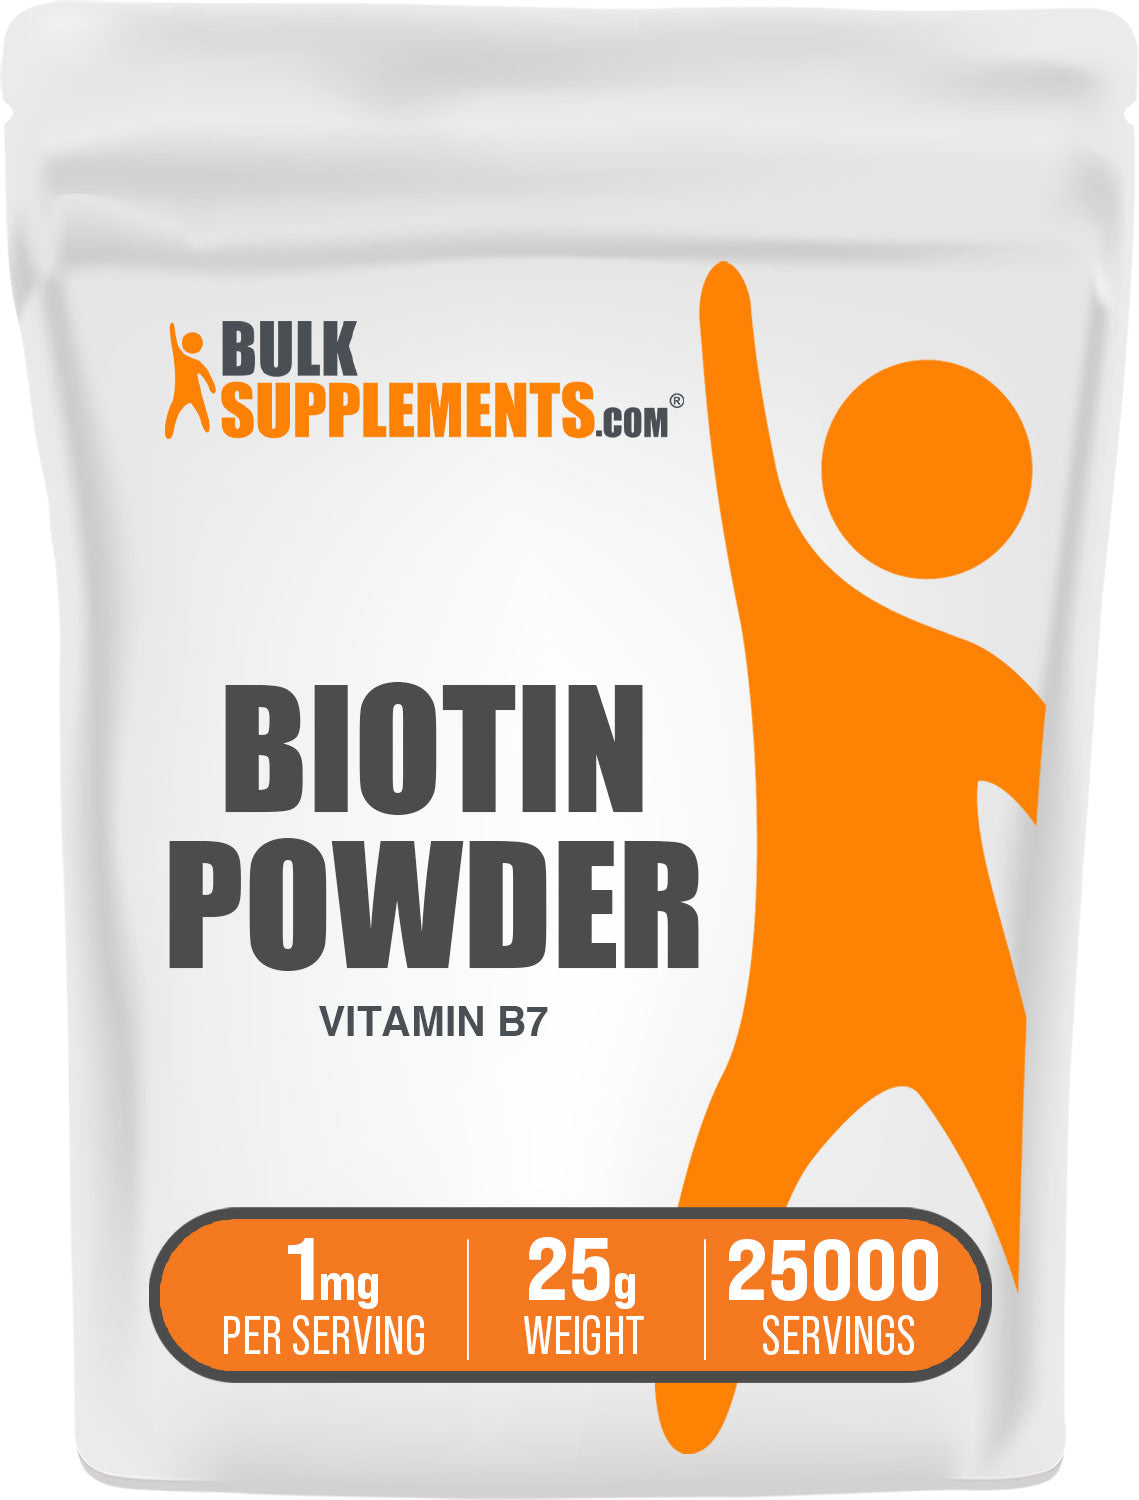 BulkSupplements Biotin Powder Vitamin B7 25g bag